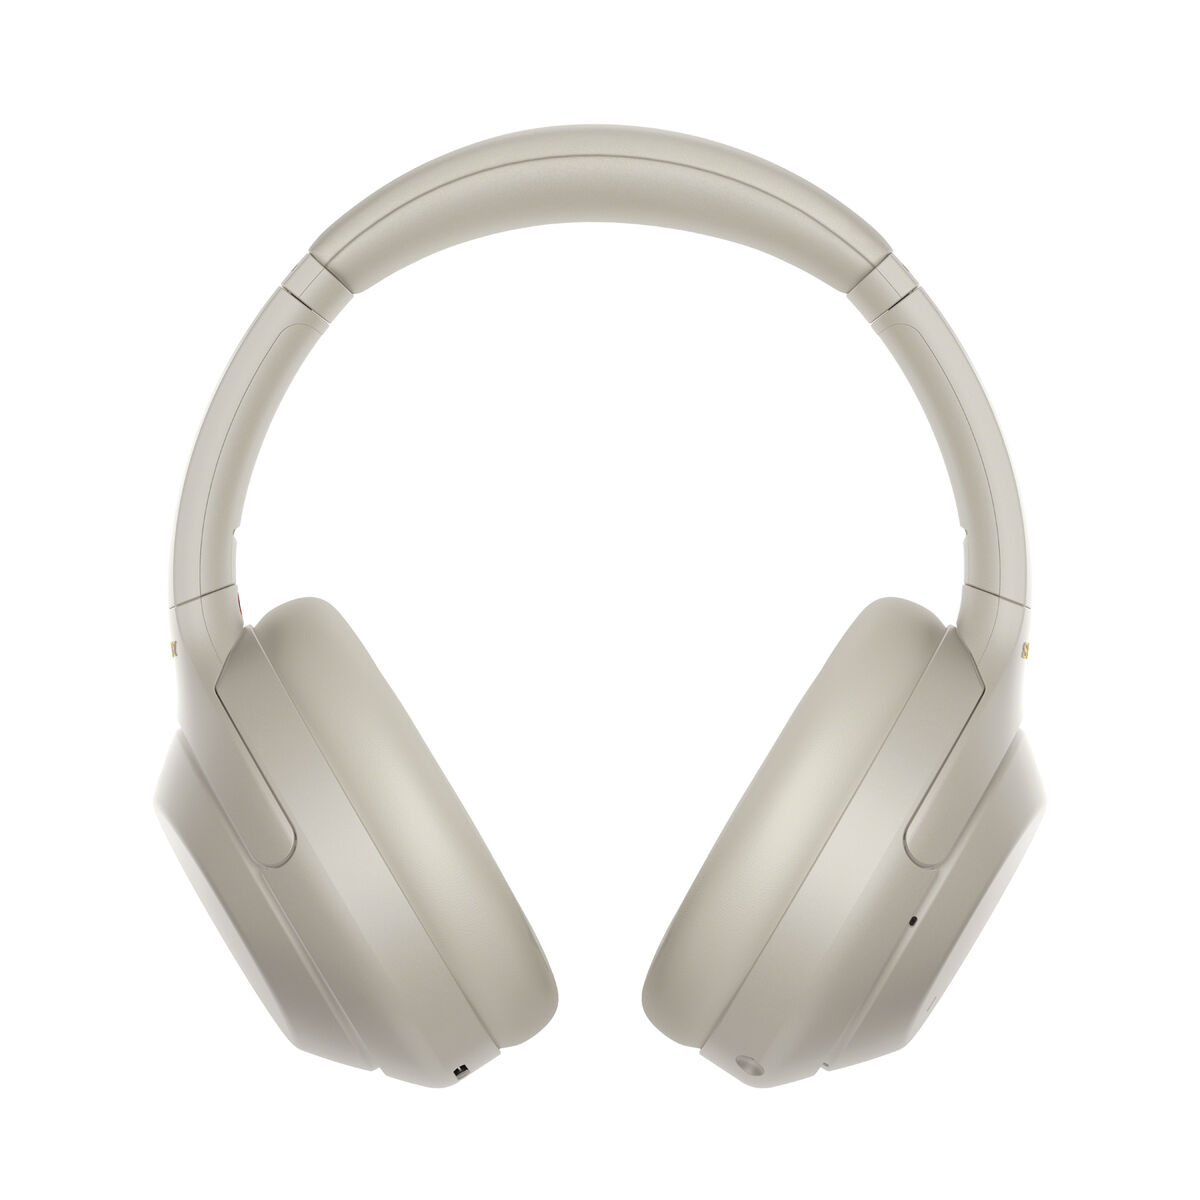 Auscultadores Bluetooth Sony Wh-1000xm4 - Headphones sem fio | Sport Zone MKP